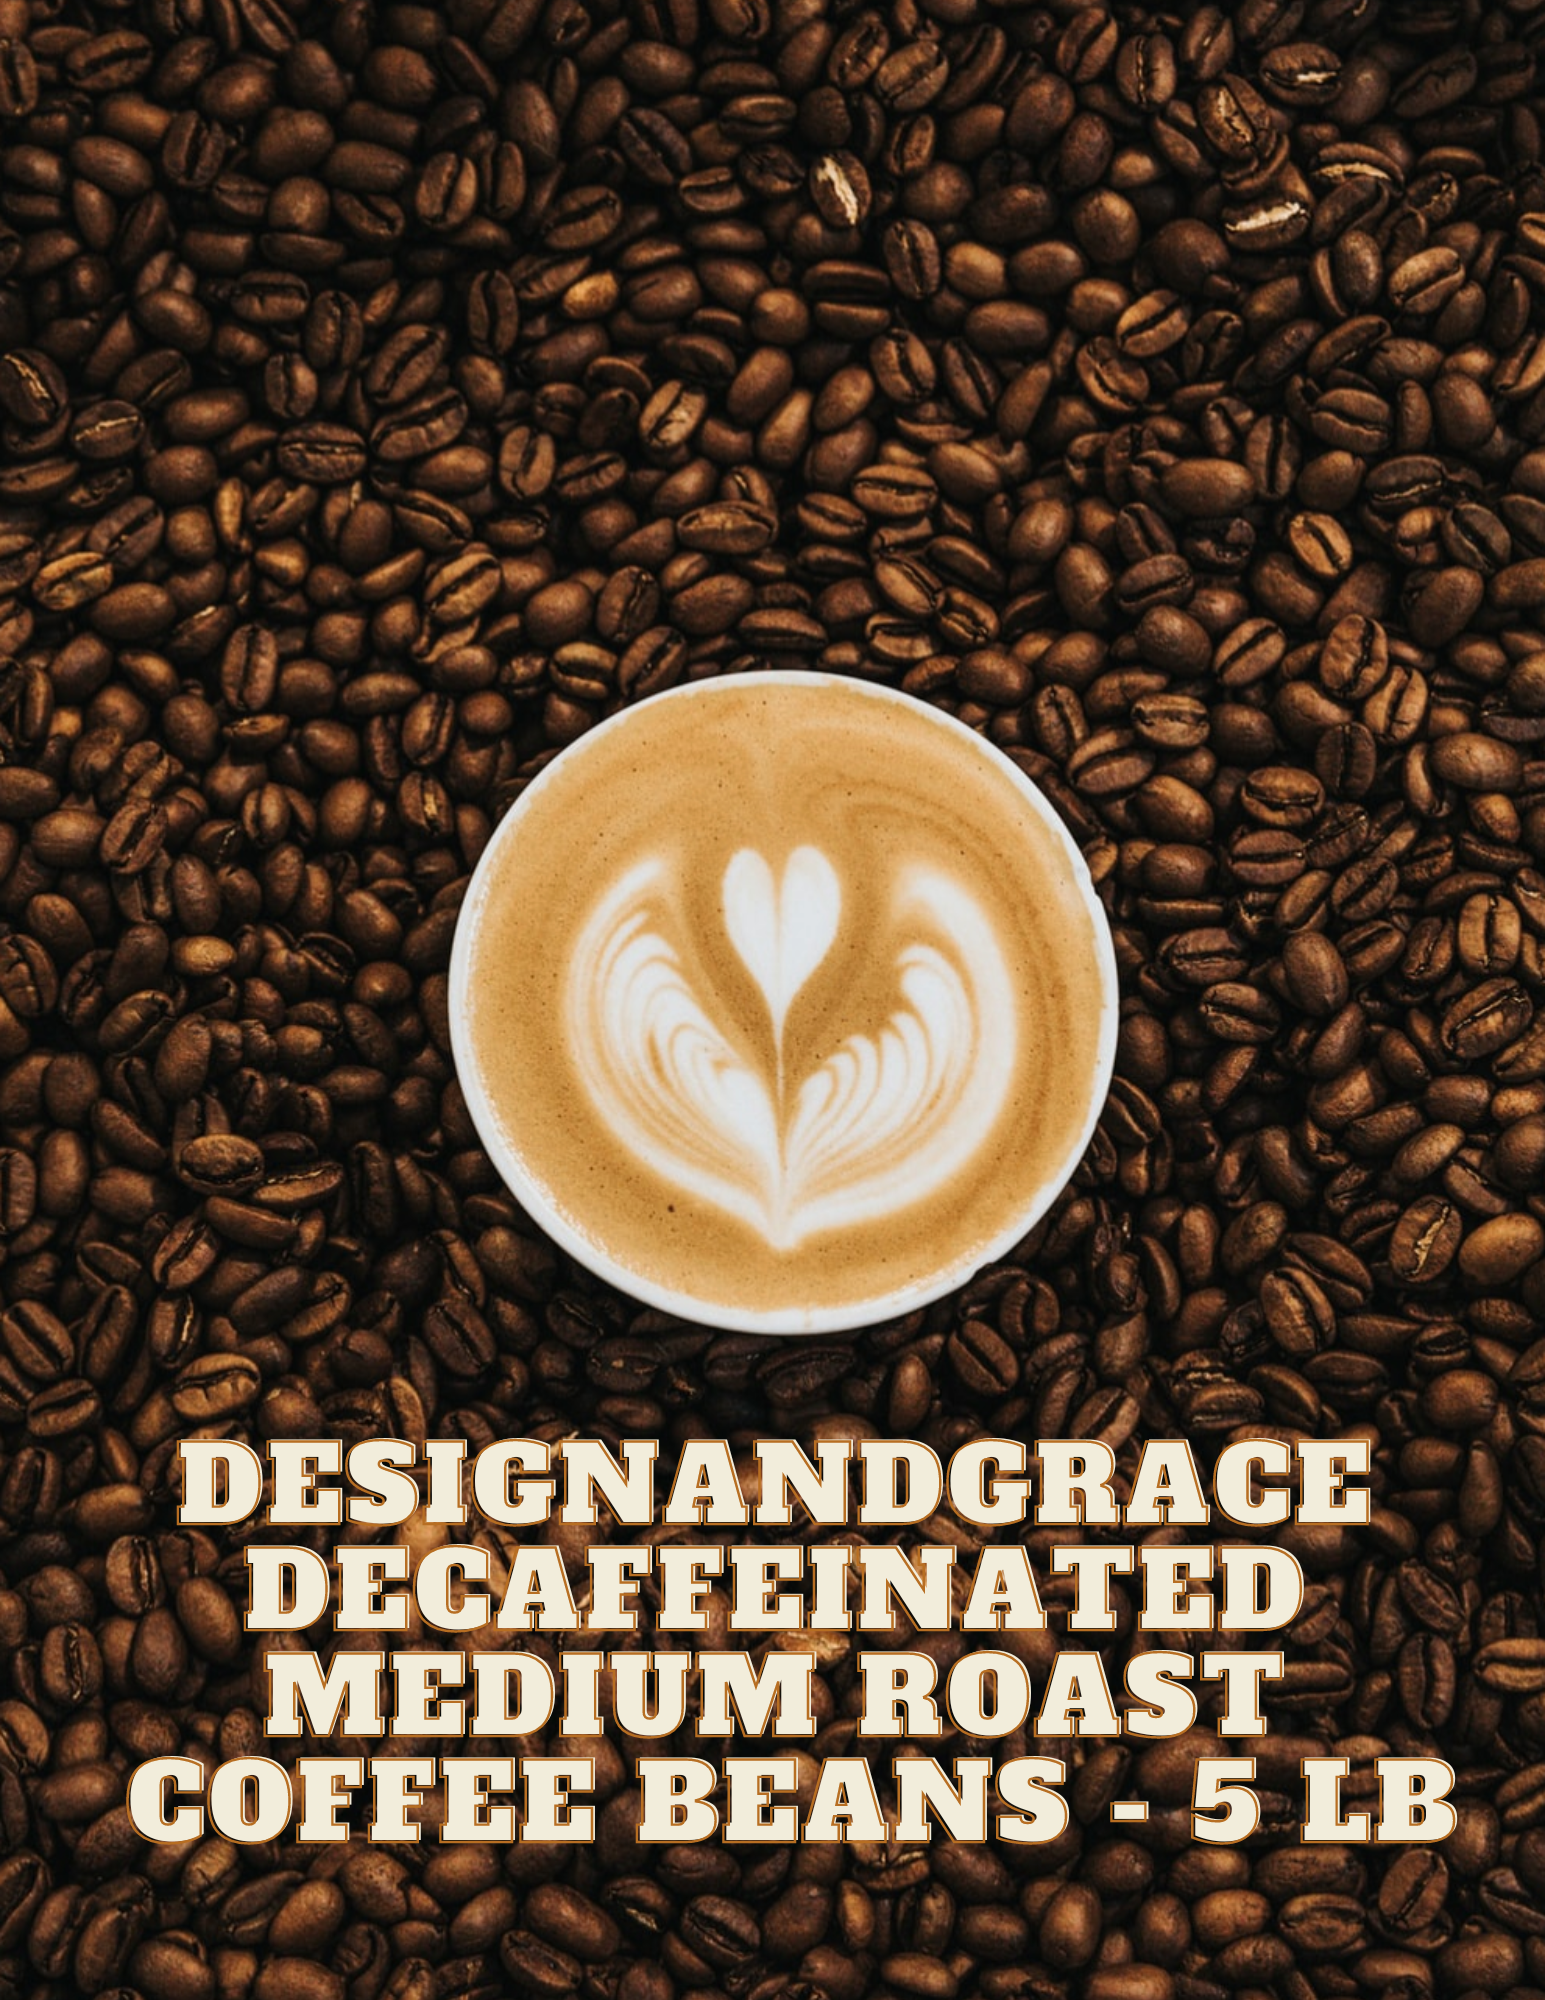 DesignandGrace Decaffeinated Medium Roast Coffee Beans - 5 lb